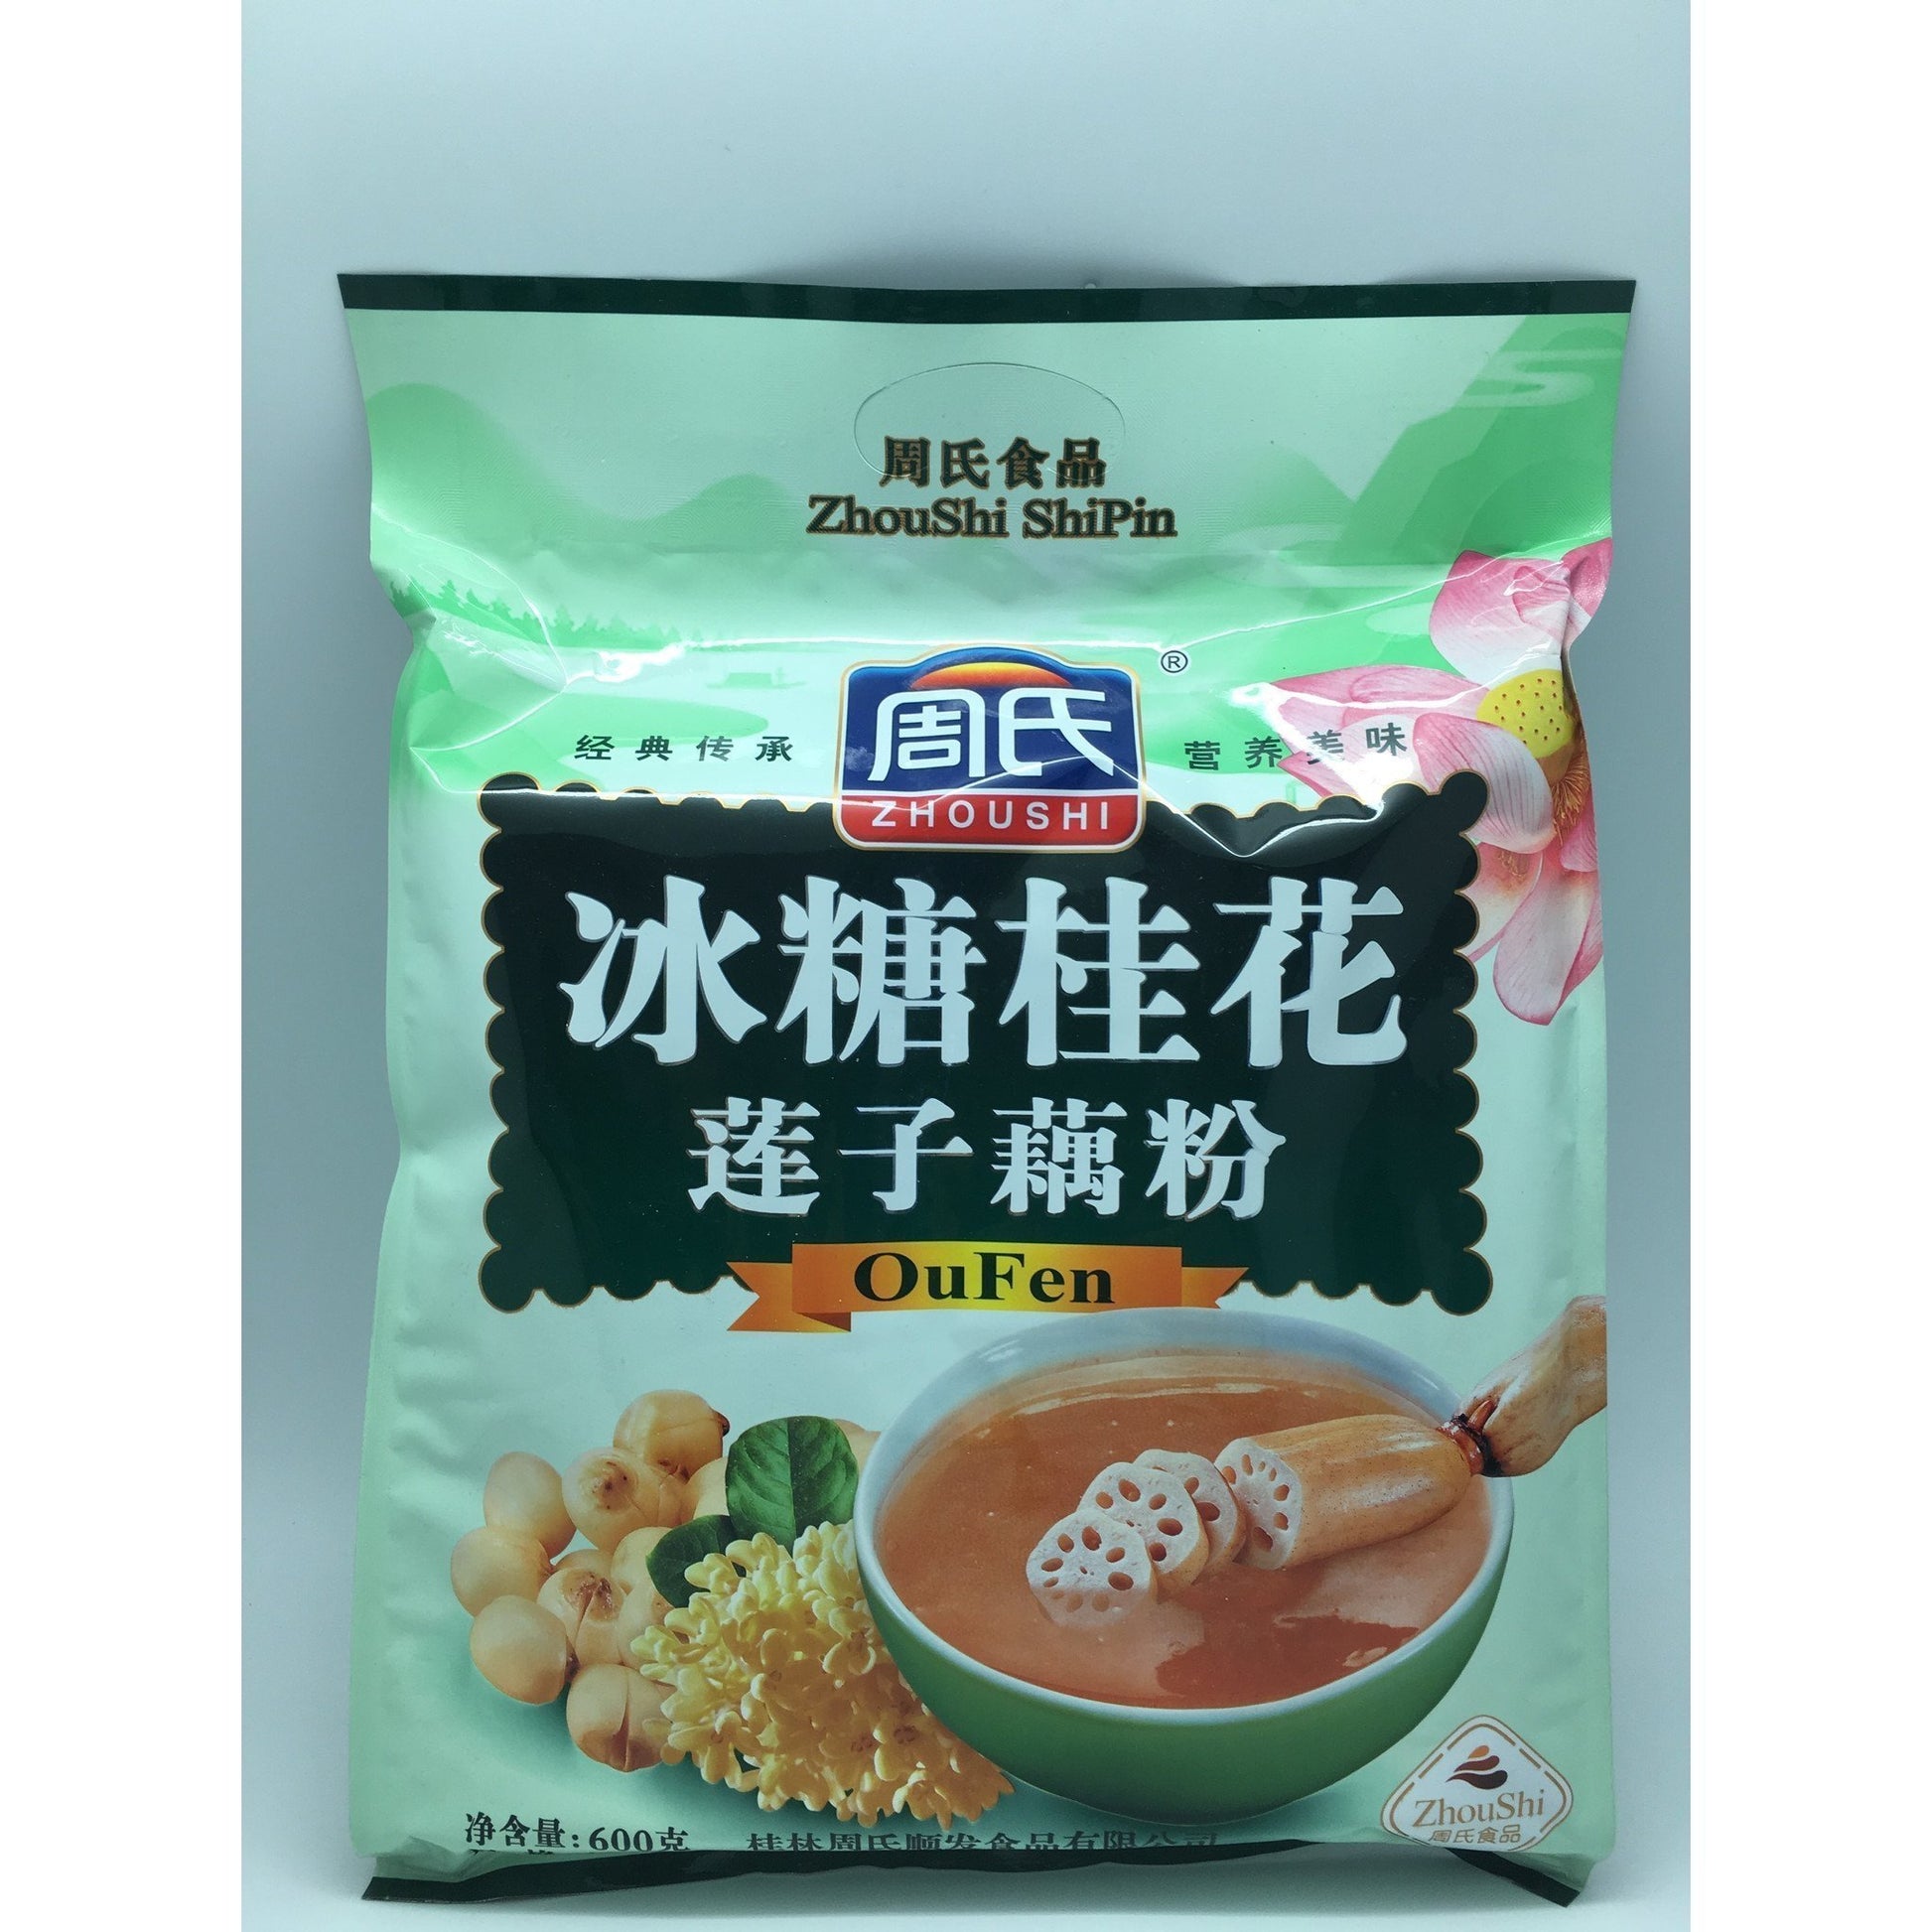 I023G ZhouShi Brand - Lotus Root: Lotus Seed Powder Beverage 600g -16 bags / 1 CTN - New Eastland Pty Ltd - Asian food wholesalers